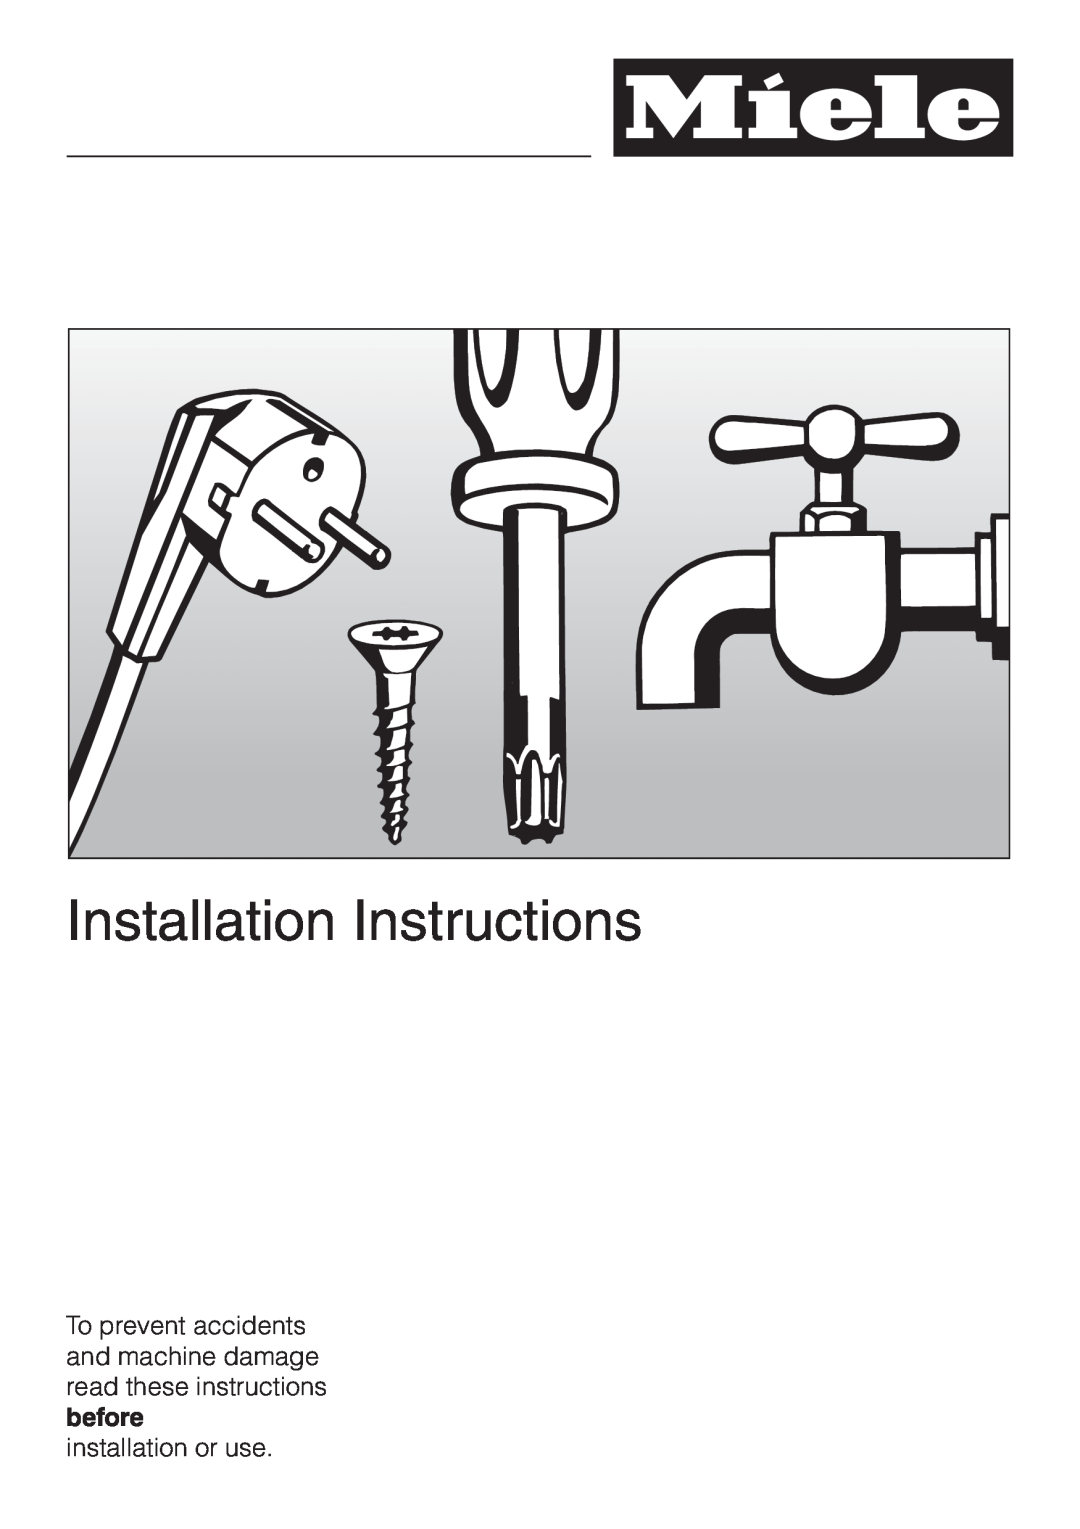 Miele DG 2661 installation instructions Installation Instructions, installation or use 